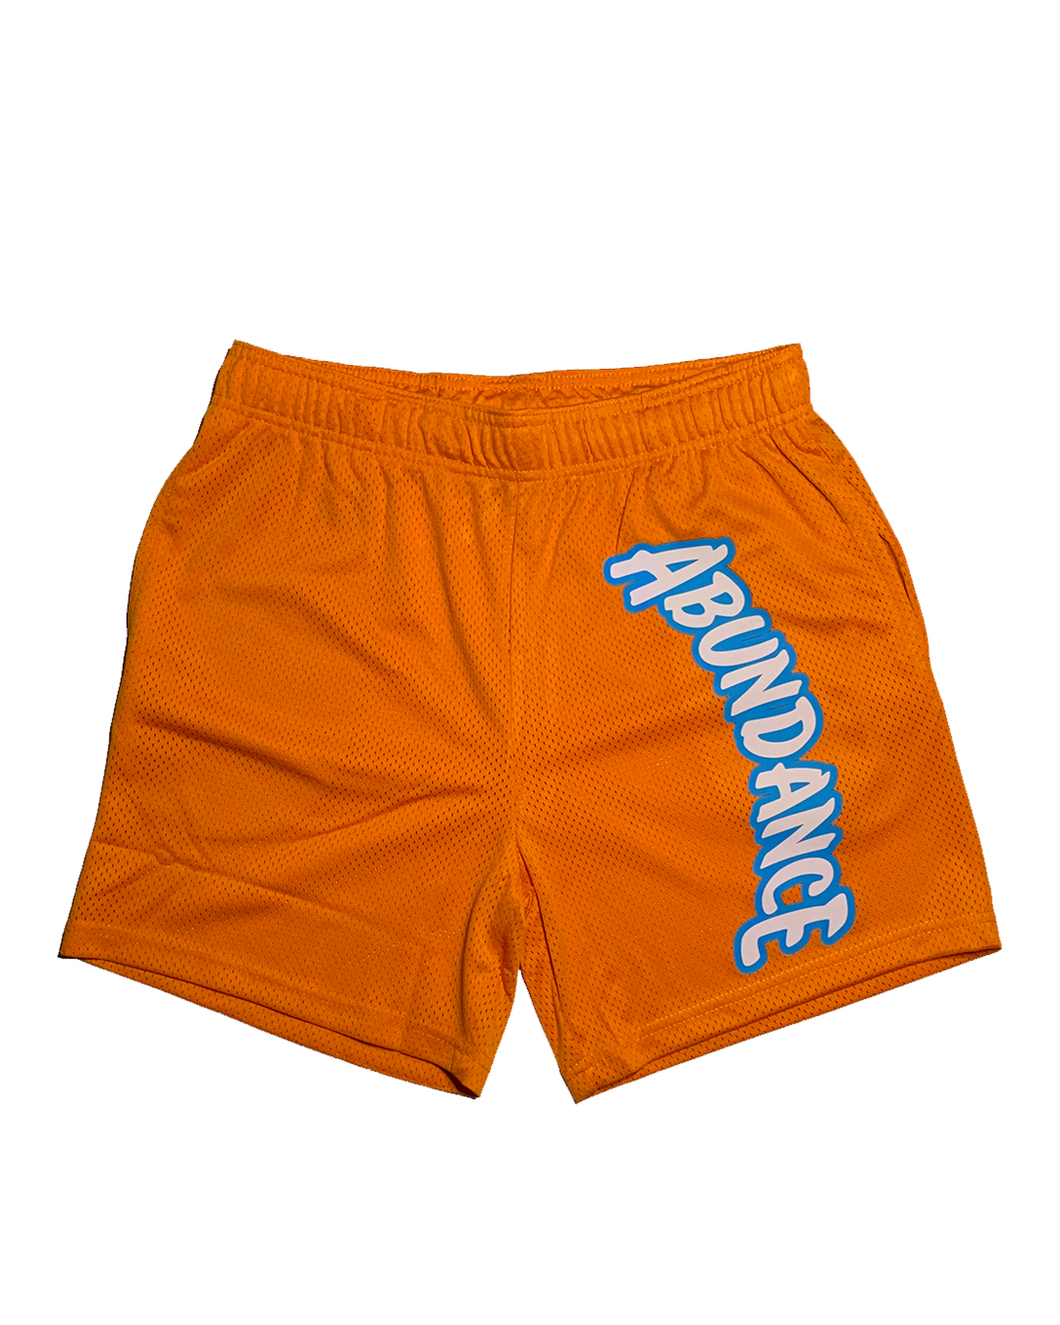 Abundance Mesh Shorts (Orange)